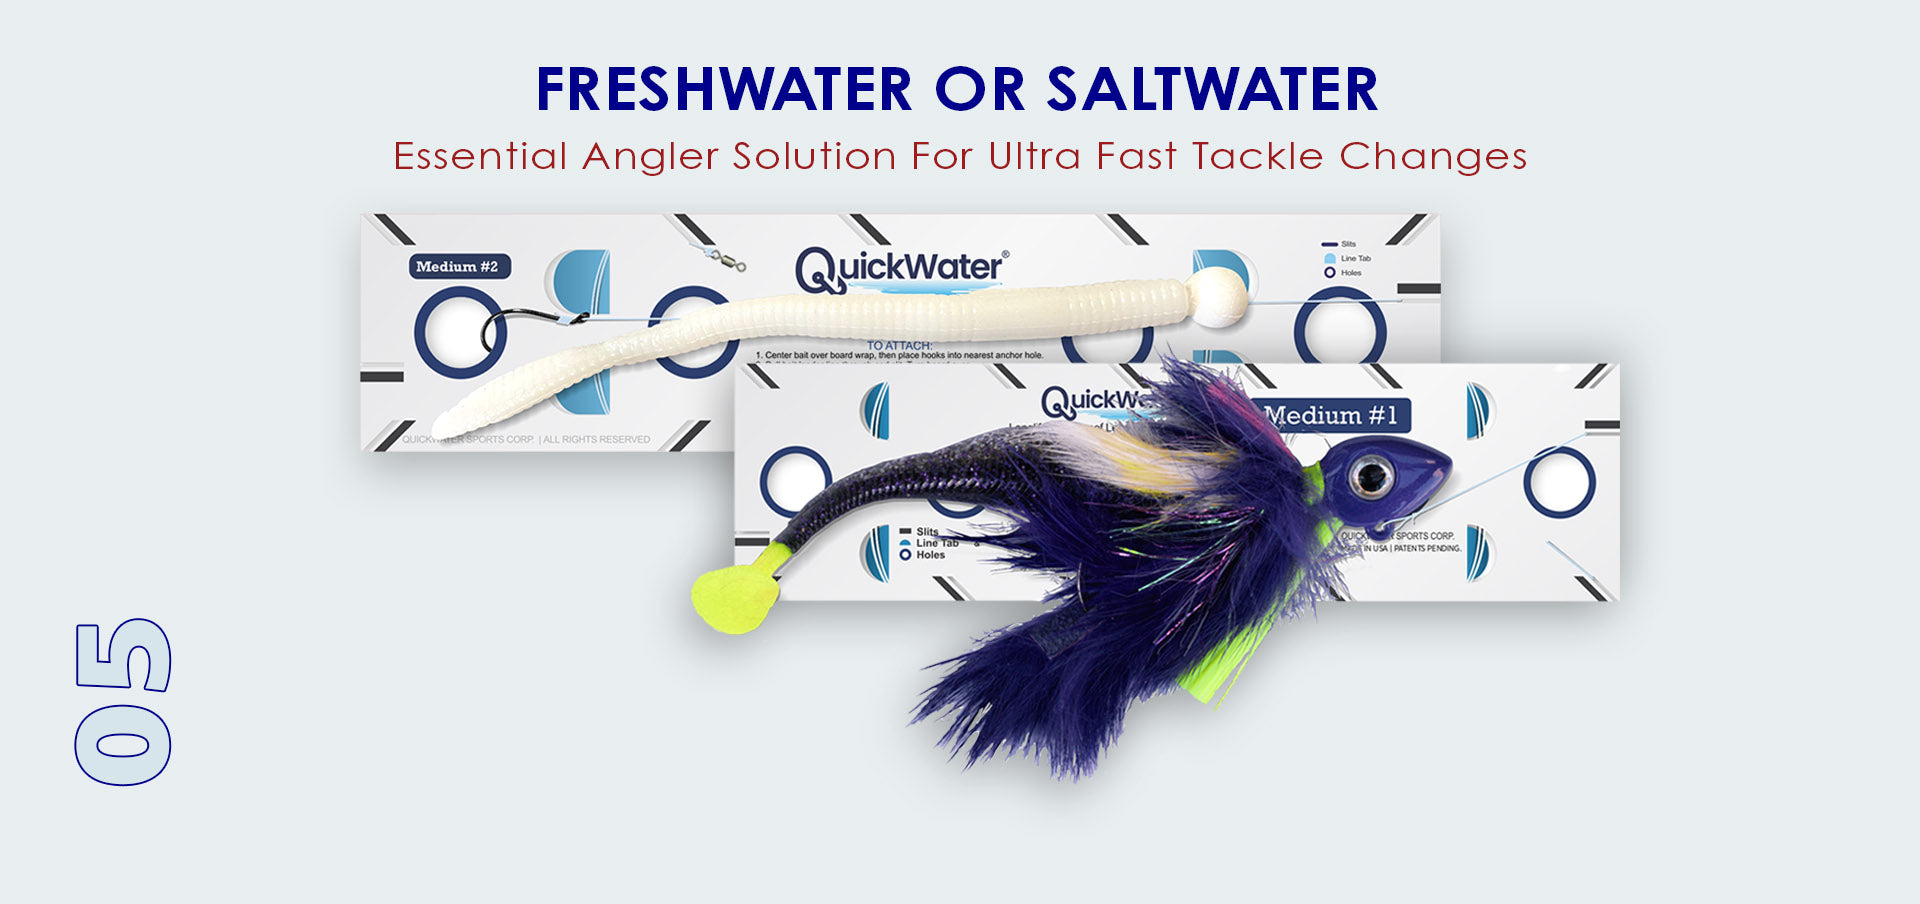 Slide 5: Freshwater or saltwater. Essential angler solution for ultra fast tackle changes.